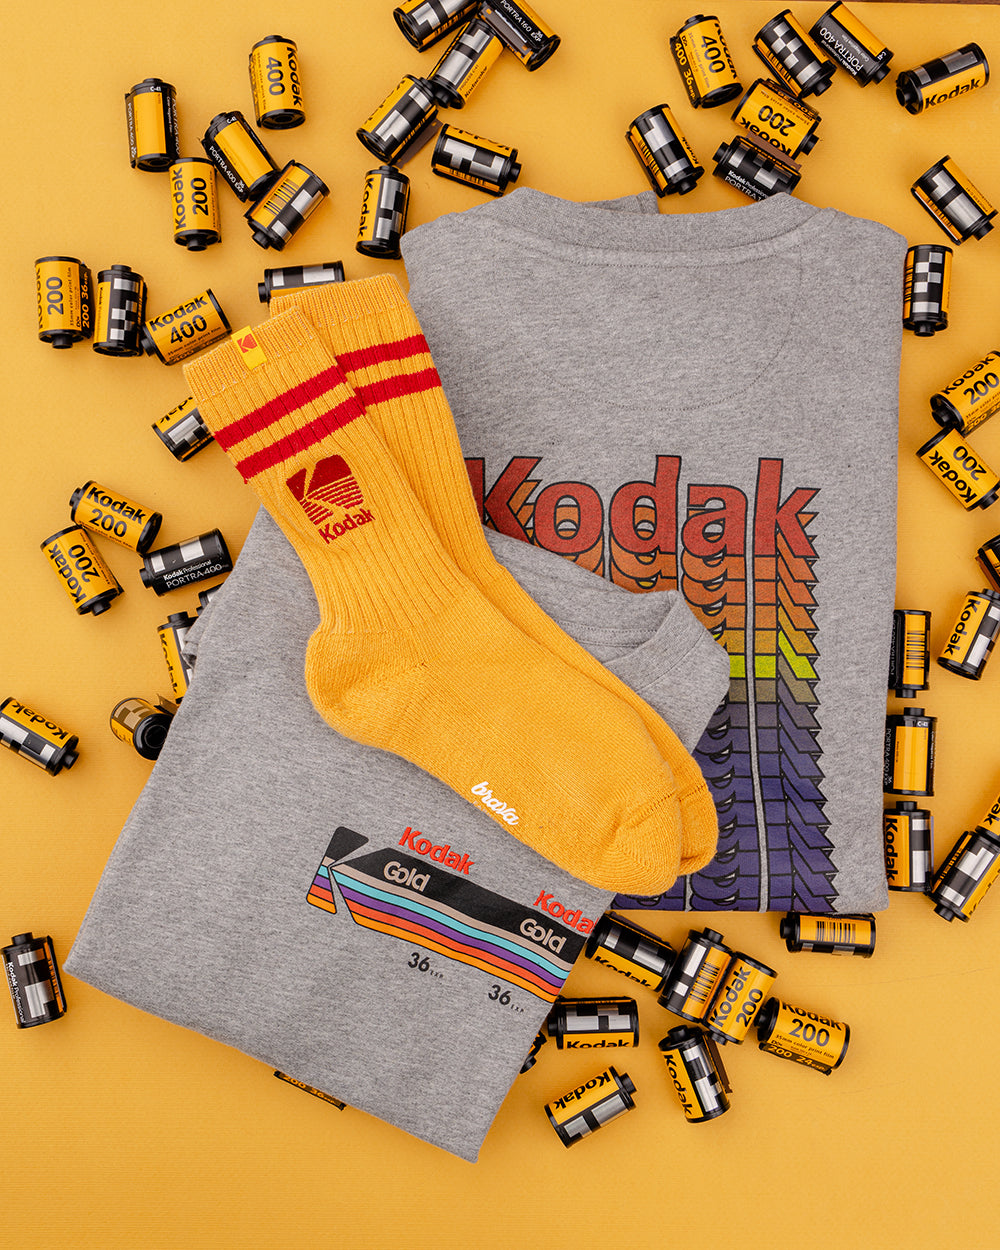 Kodak Color Gold Pack